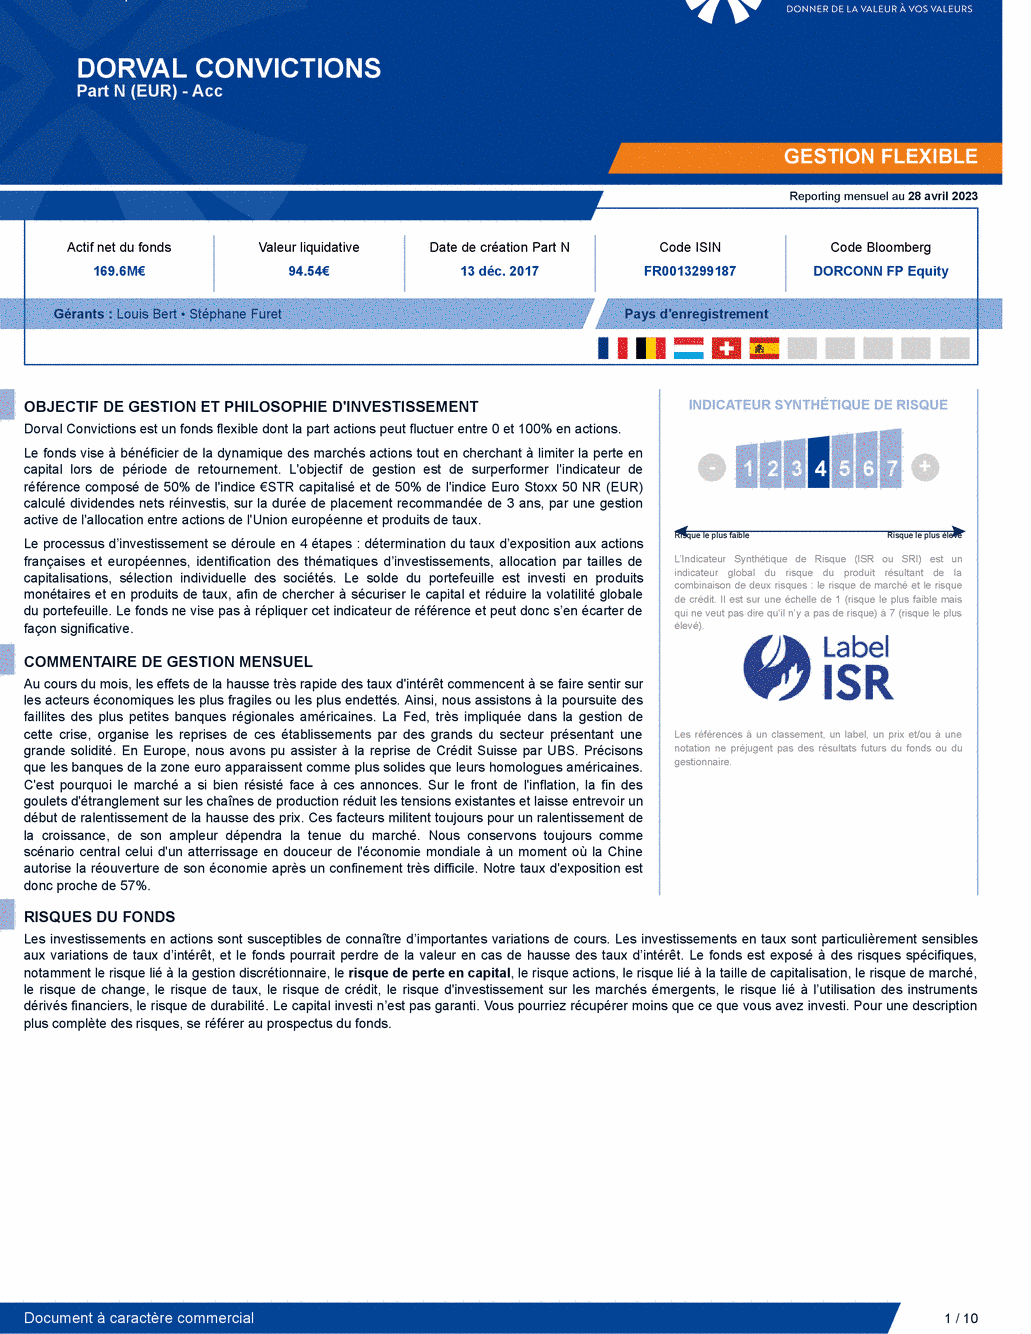 Reporting DORVAL CONVICTIONS N - 28/04/2023 - Français